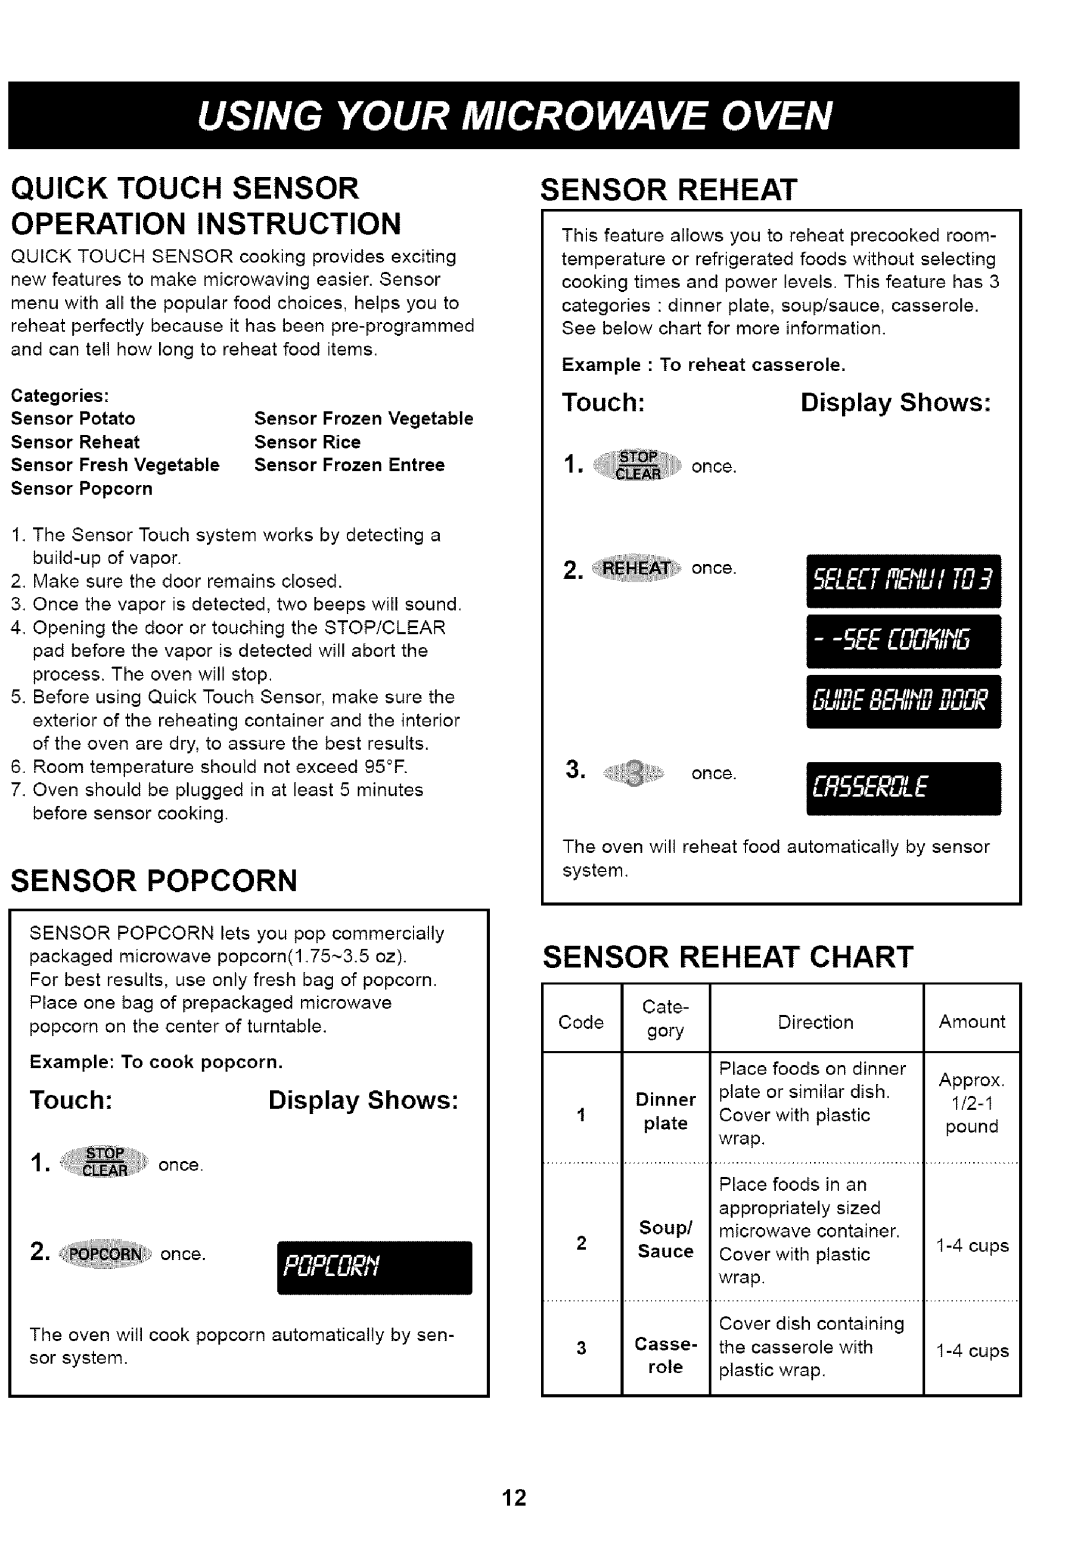 Kenmore 721.61283 Quick Touch Sensor Operation Instruction, Sensor Popcorn, 1.sTo, Sensor Reheat Chart, RE , once 